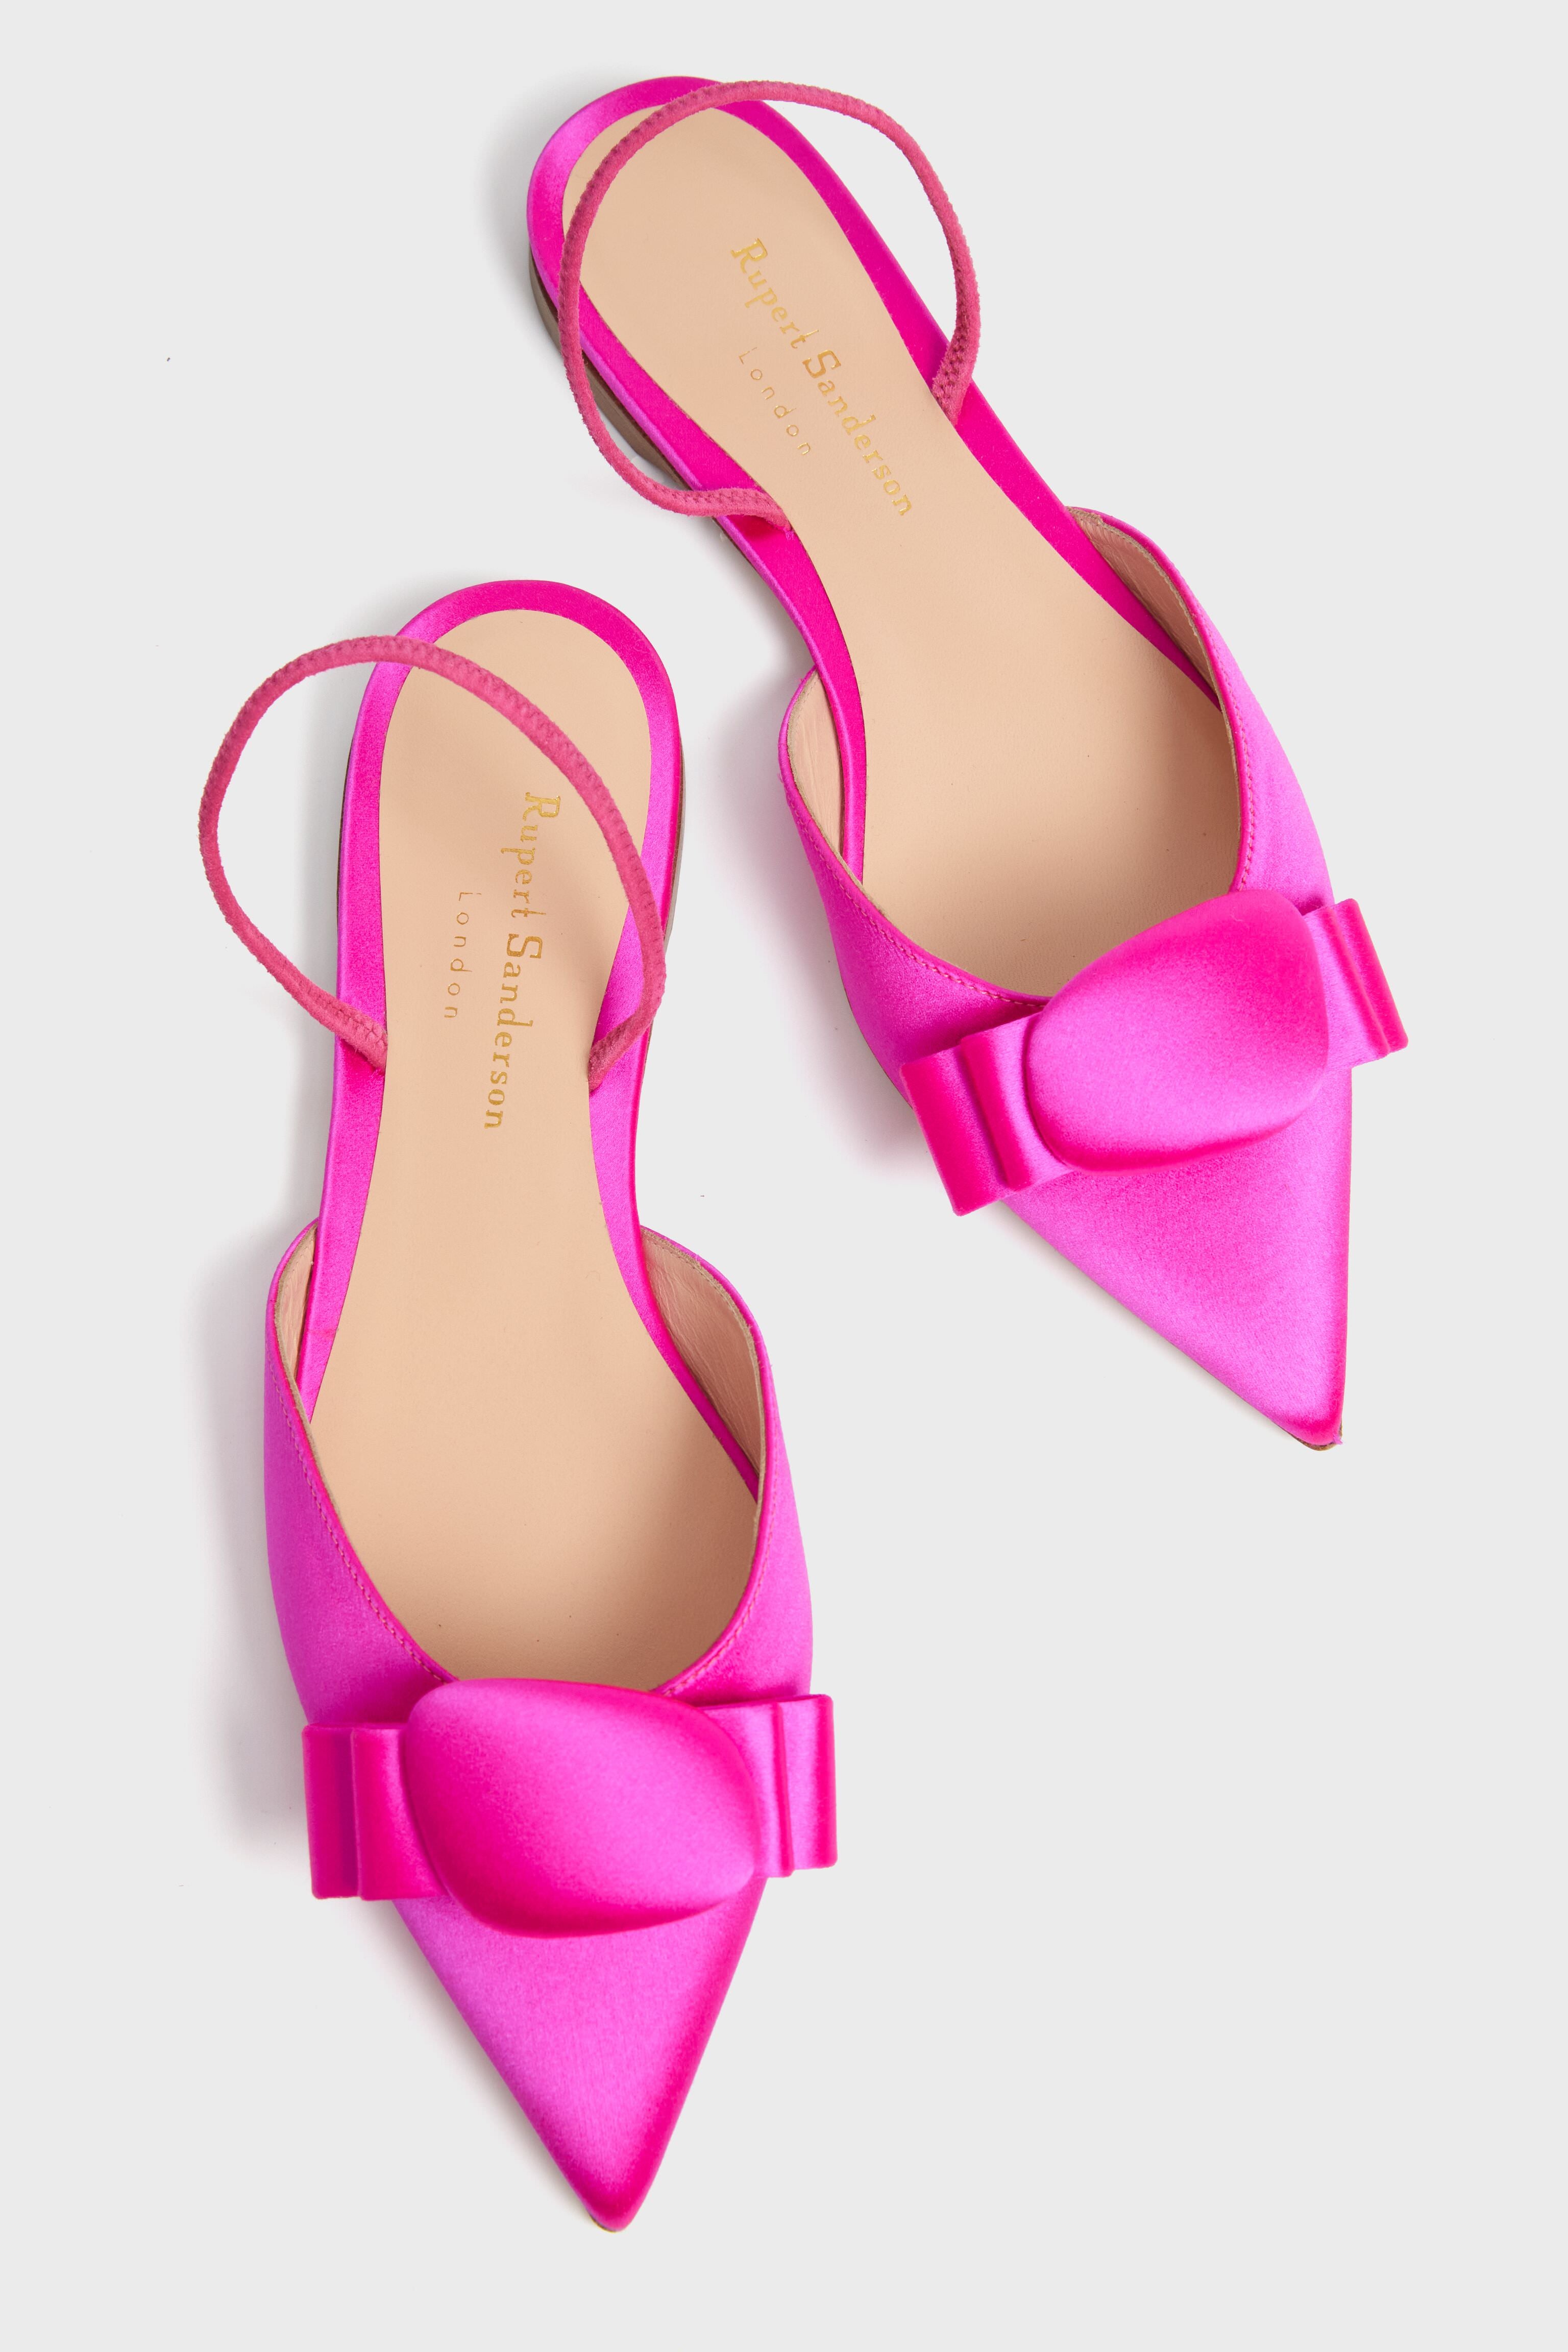 Rupert Sanderson Belinda satin ballerina shoes - Pink